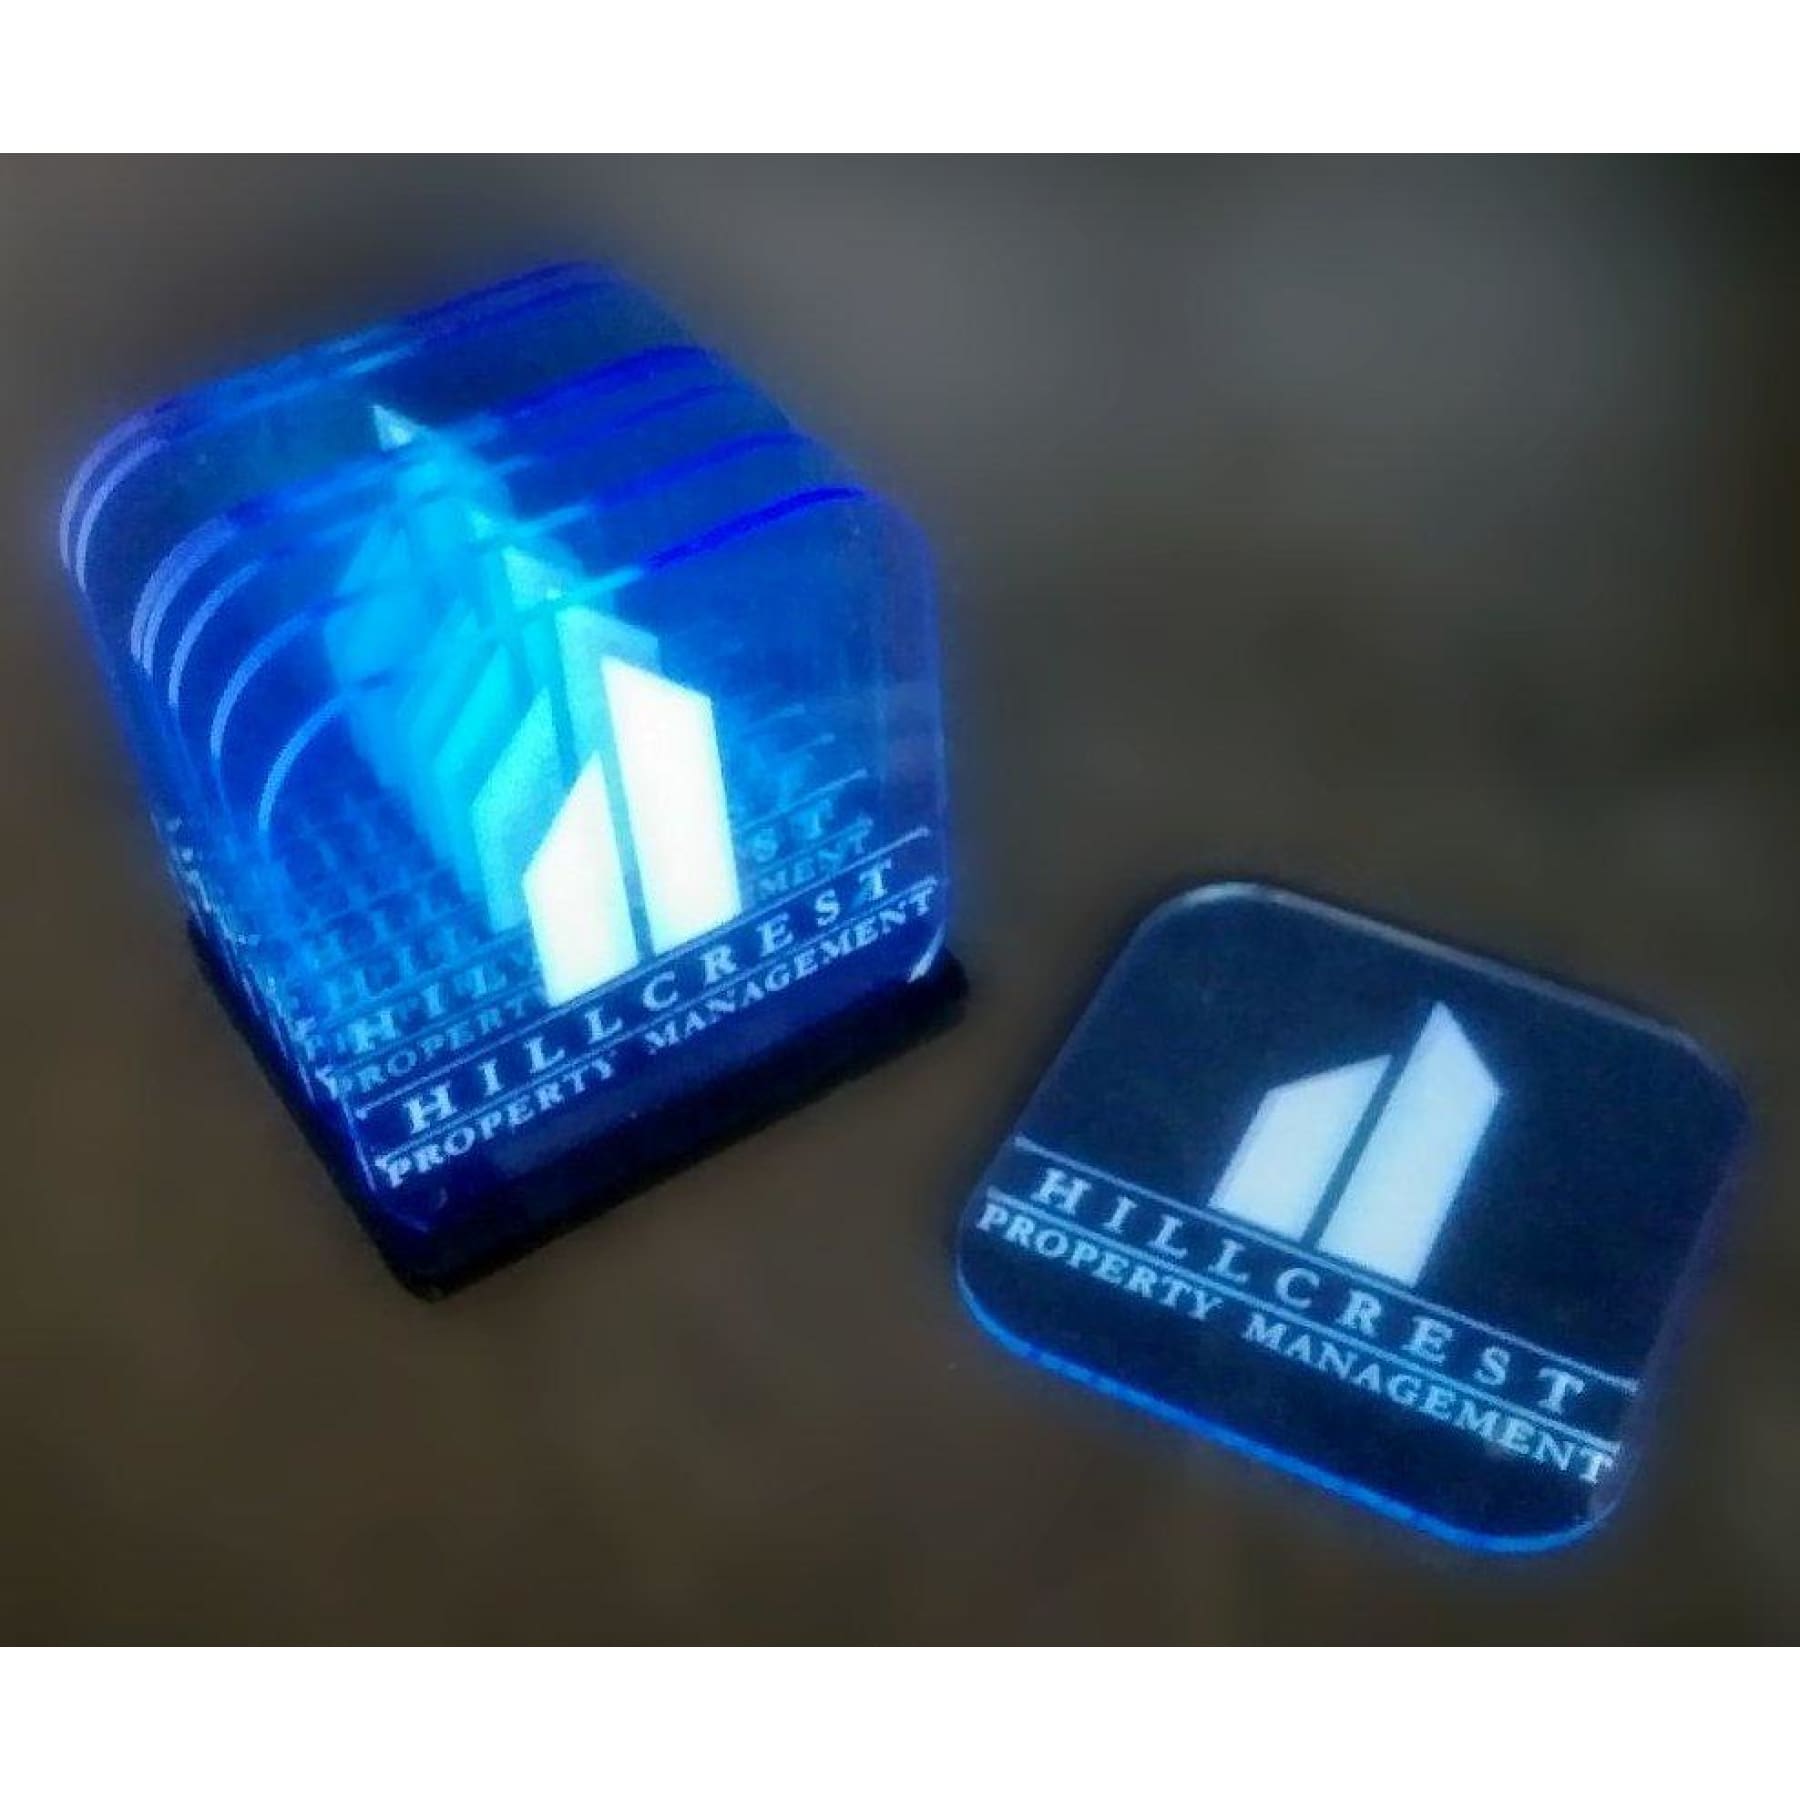 Custom Acrylic LED Light Up Coasters